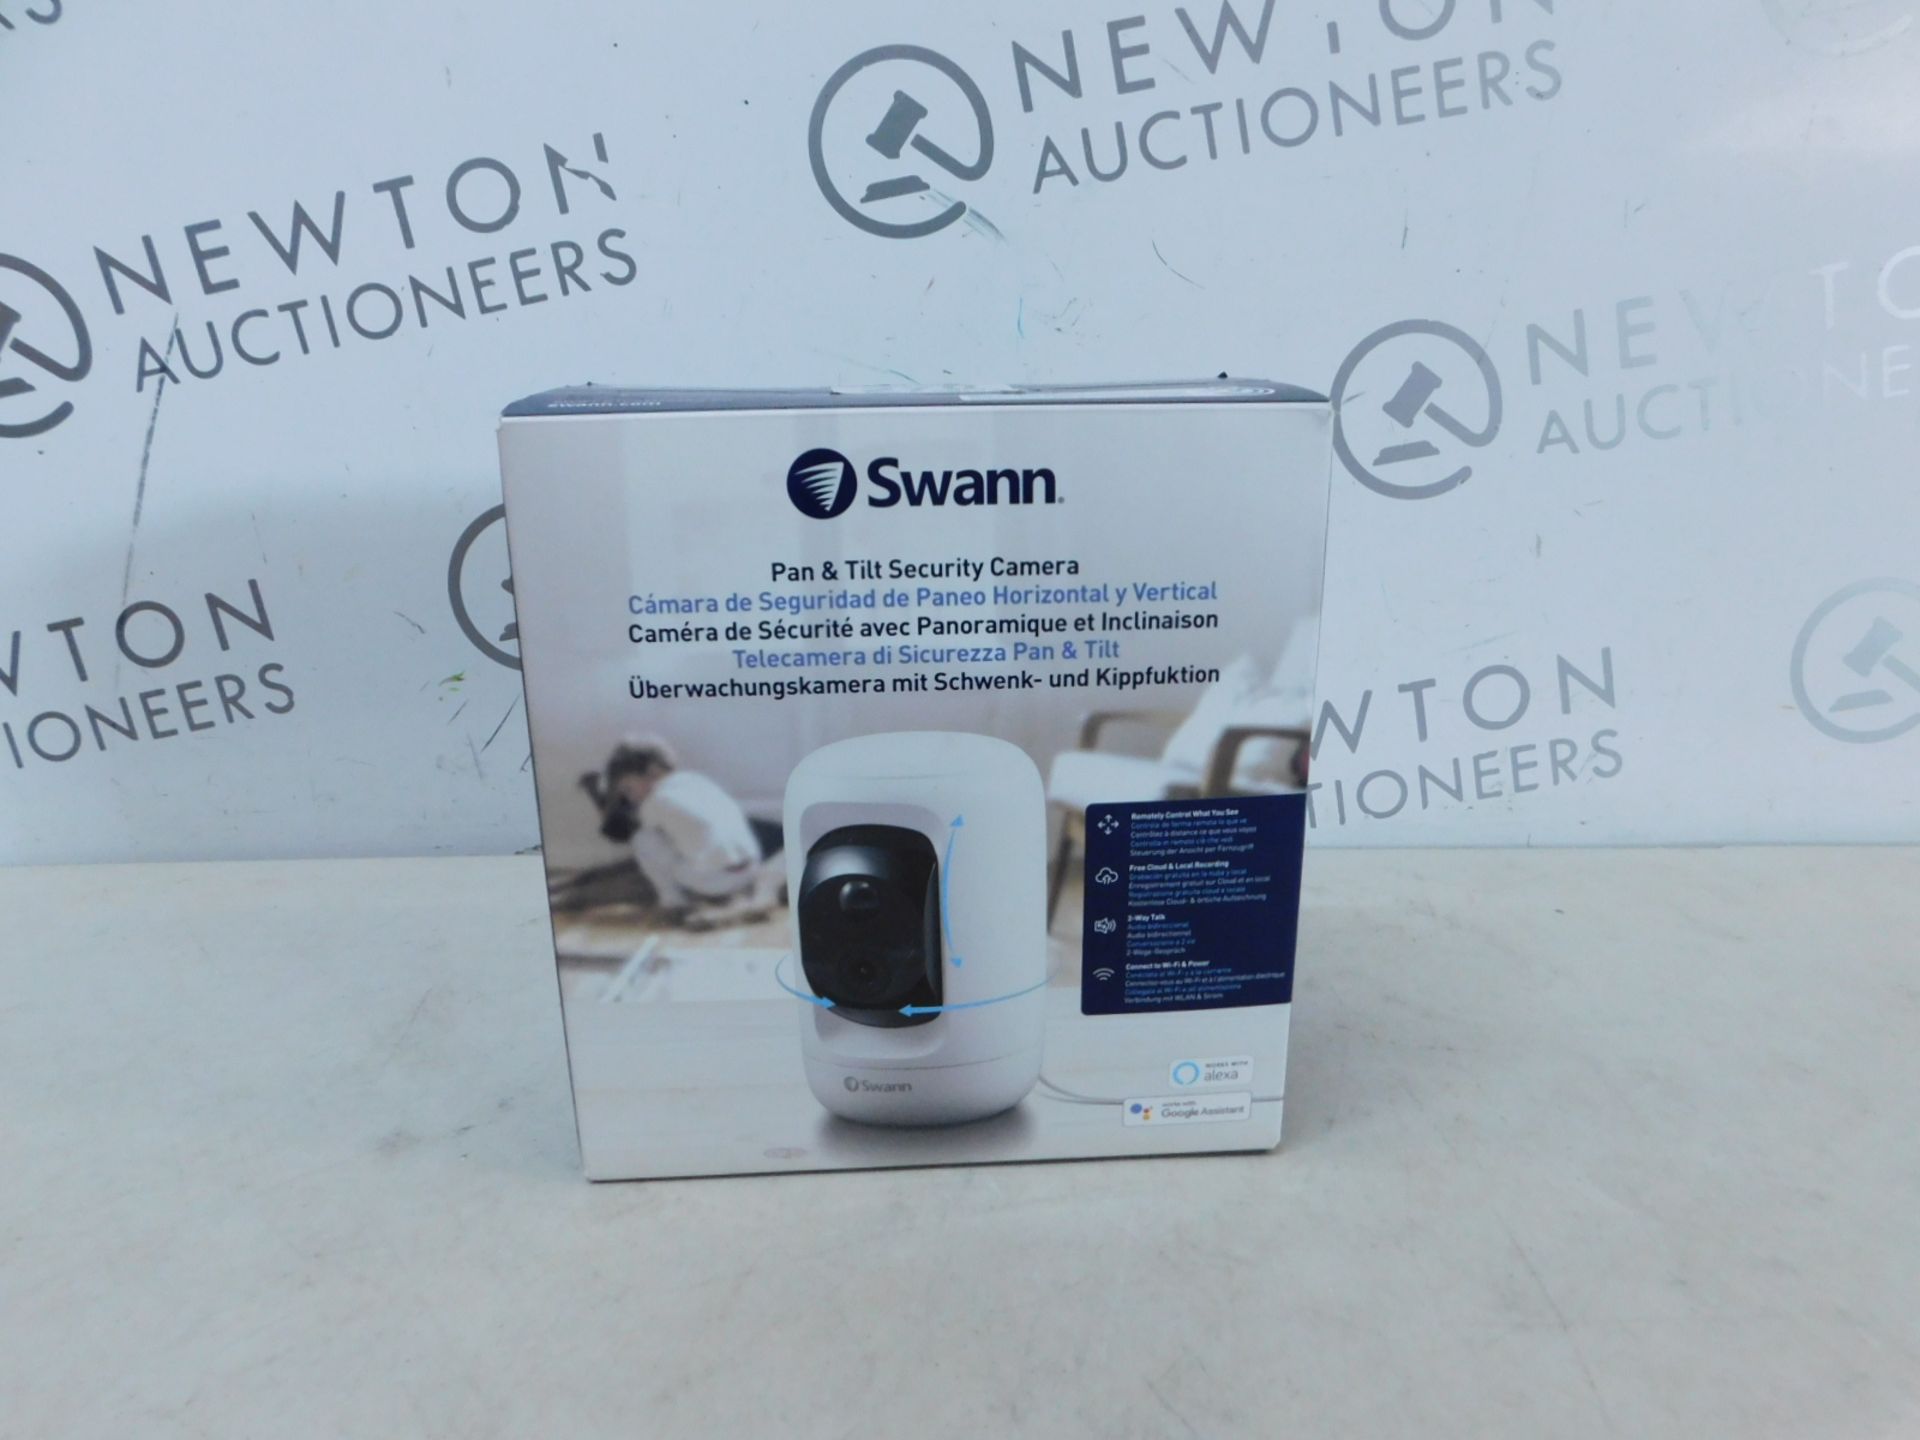 1 BOXED SWANN SWIFI-PTCAM232GB-EU PAN & TILT FULL HD 1080P WIFI SECURITY CAMERA RRP Â£99